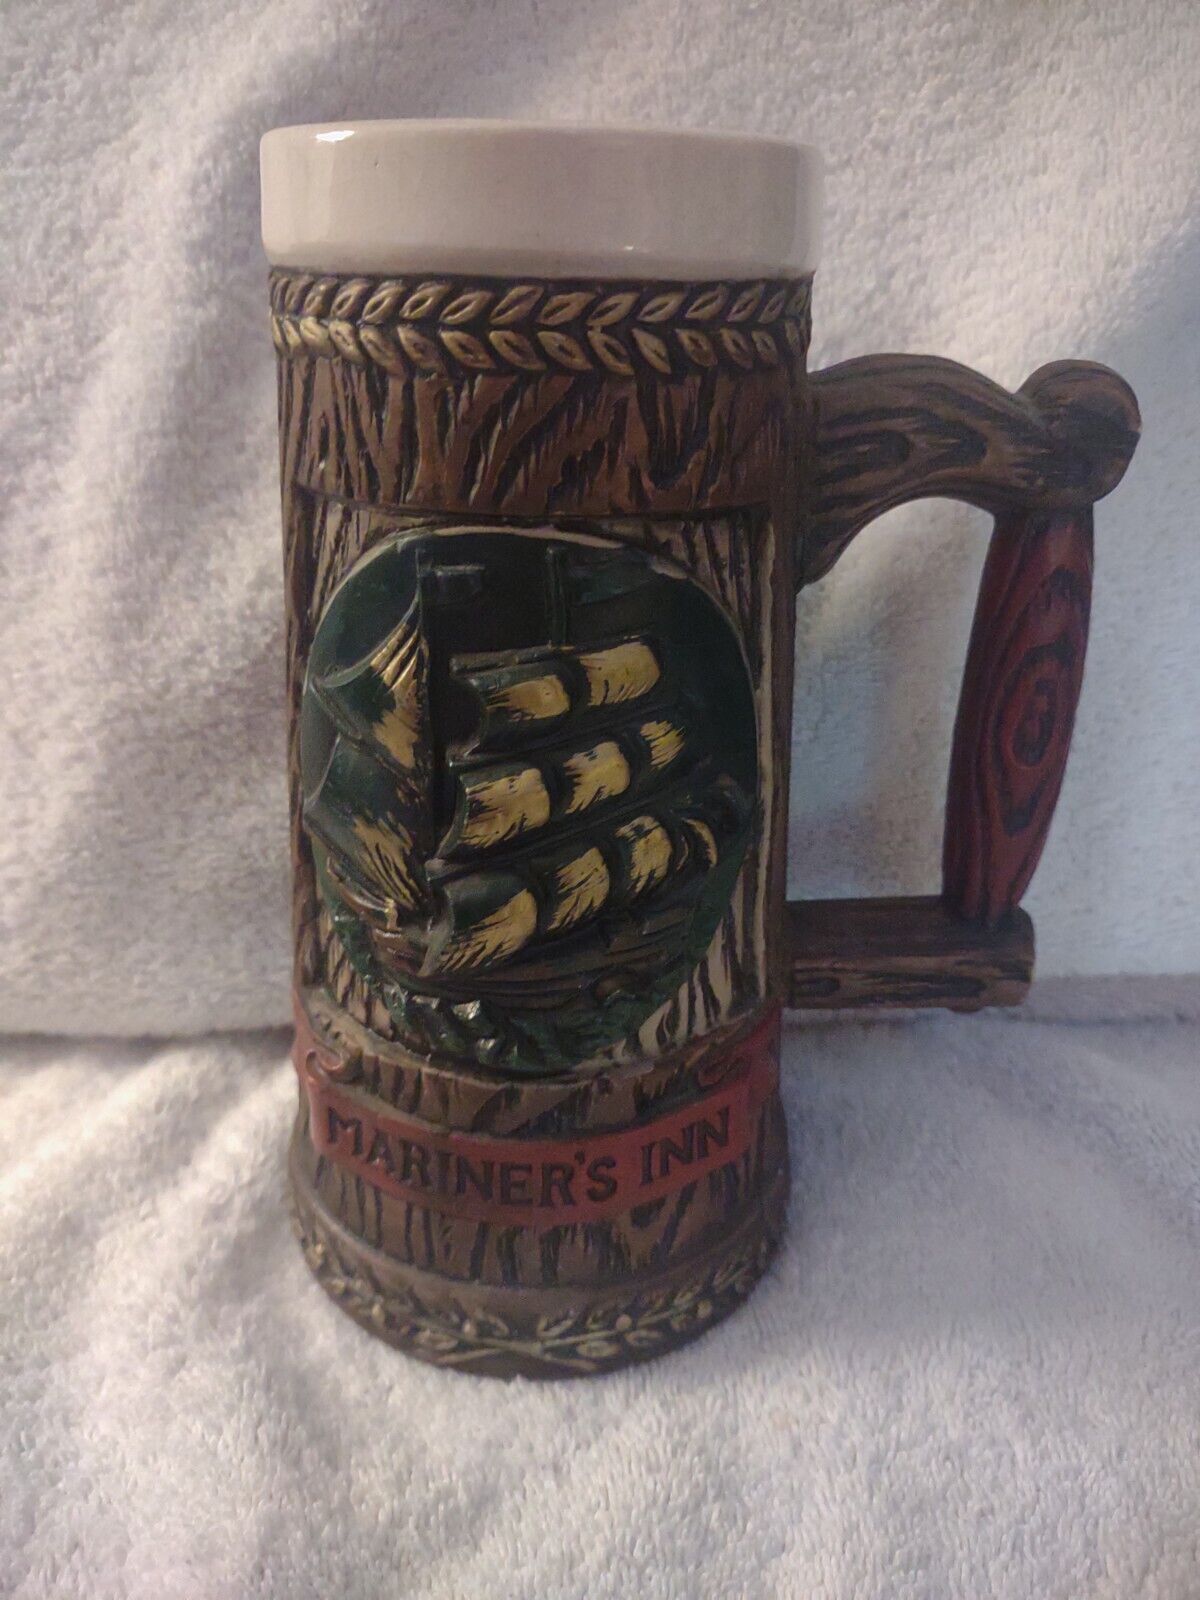 Vintage Napcoware Mariner's Inn Beer Stein Mug Japan Ship C-7115 